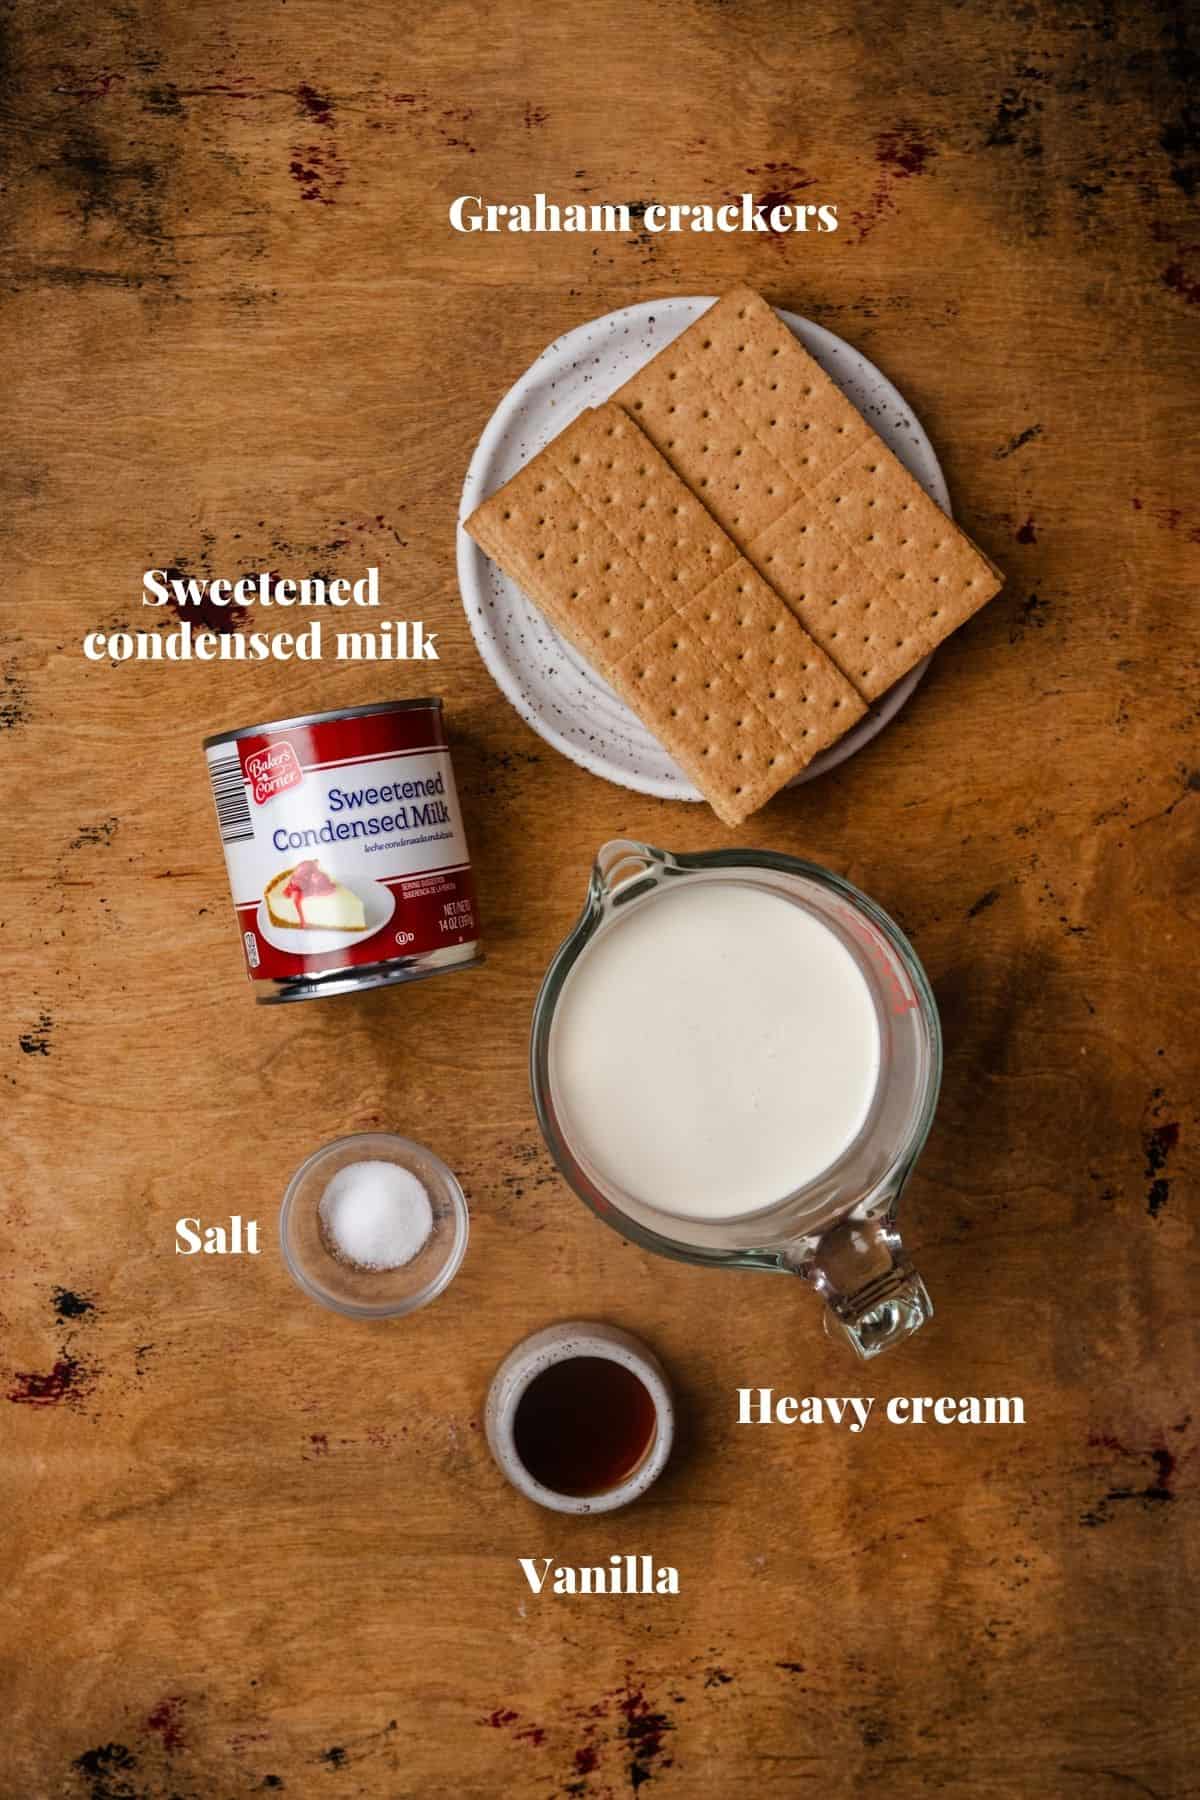 Ingredients to make graham cracker ice cream.